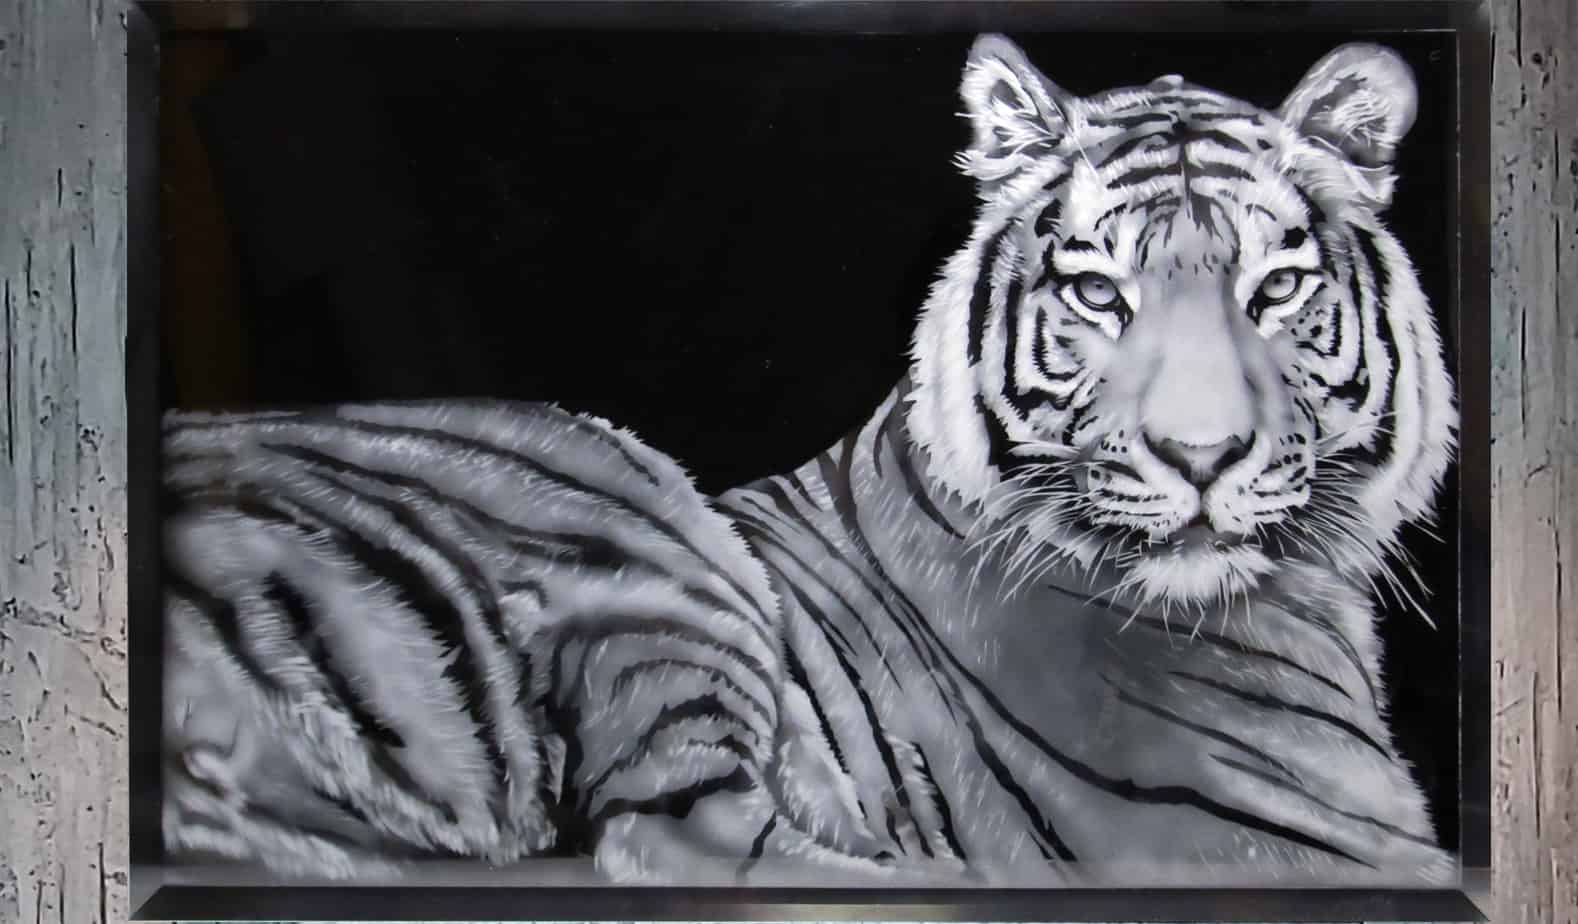 Shadeblasted Glass Art Of Bengal Tiger